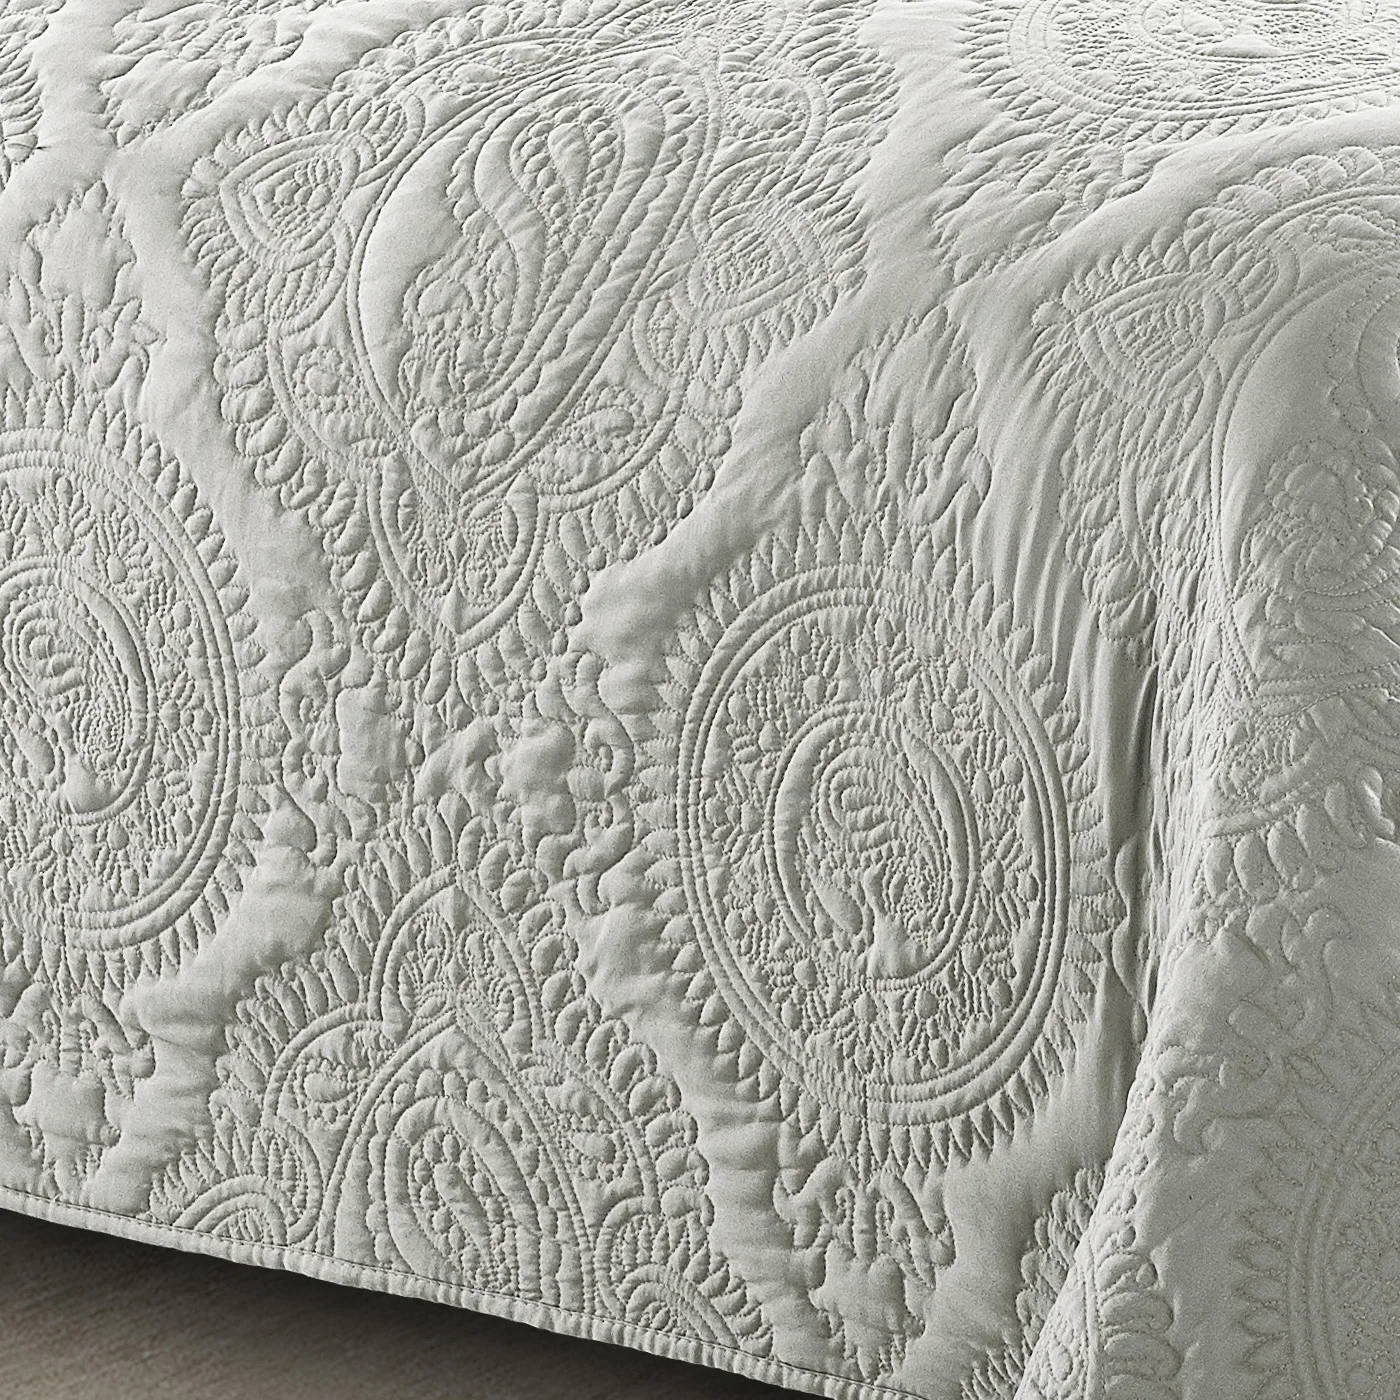 cotton quilt cover bed sheets bedding set Duvet comforter quilts bedding bedspreads embroidery quilt set